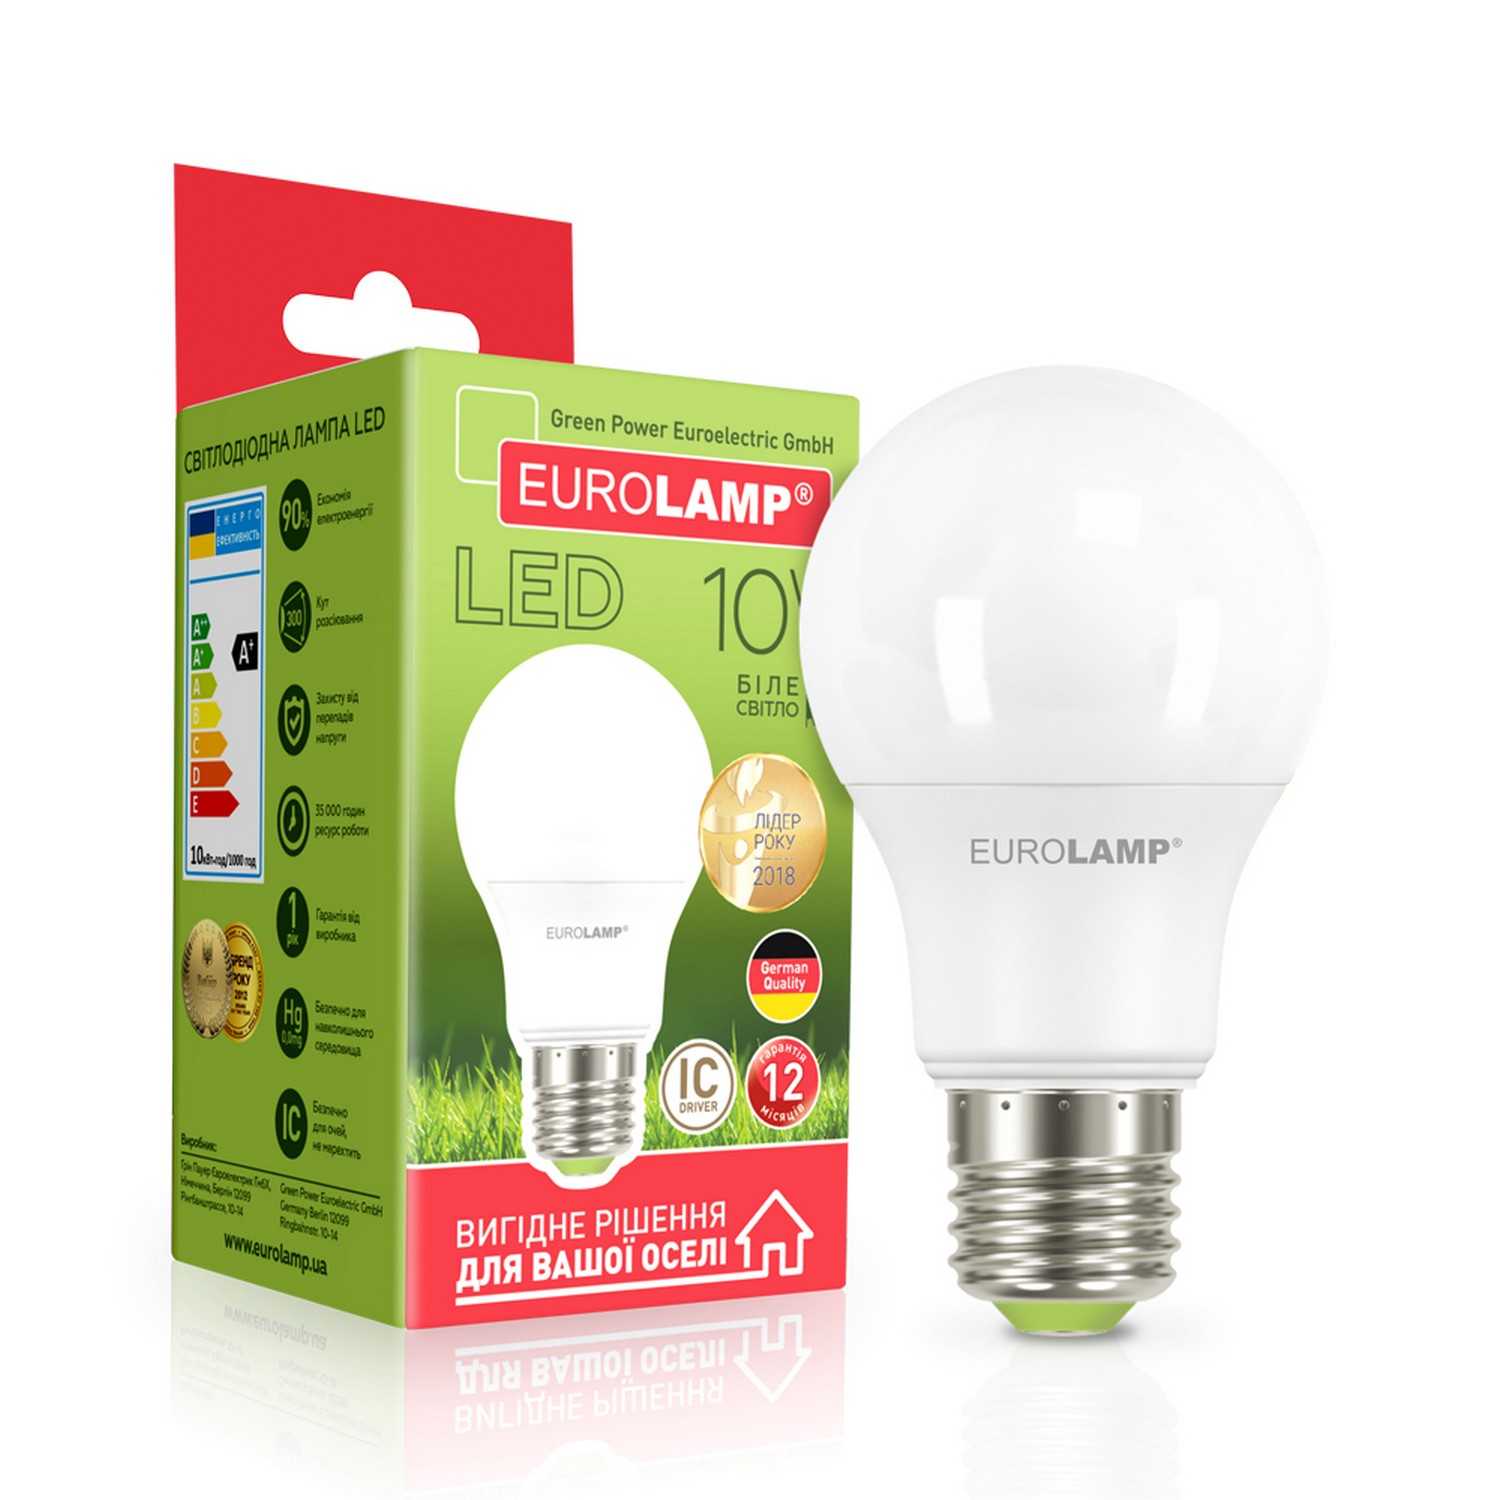 Eurolamp LED EKO A60 10W E27 4000K акція